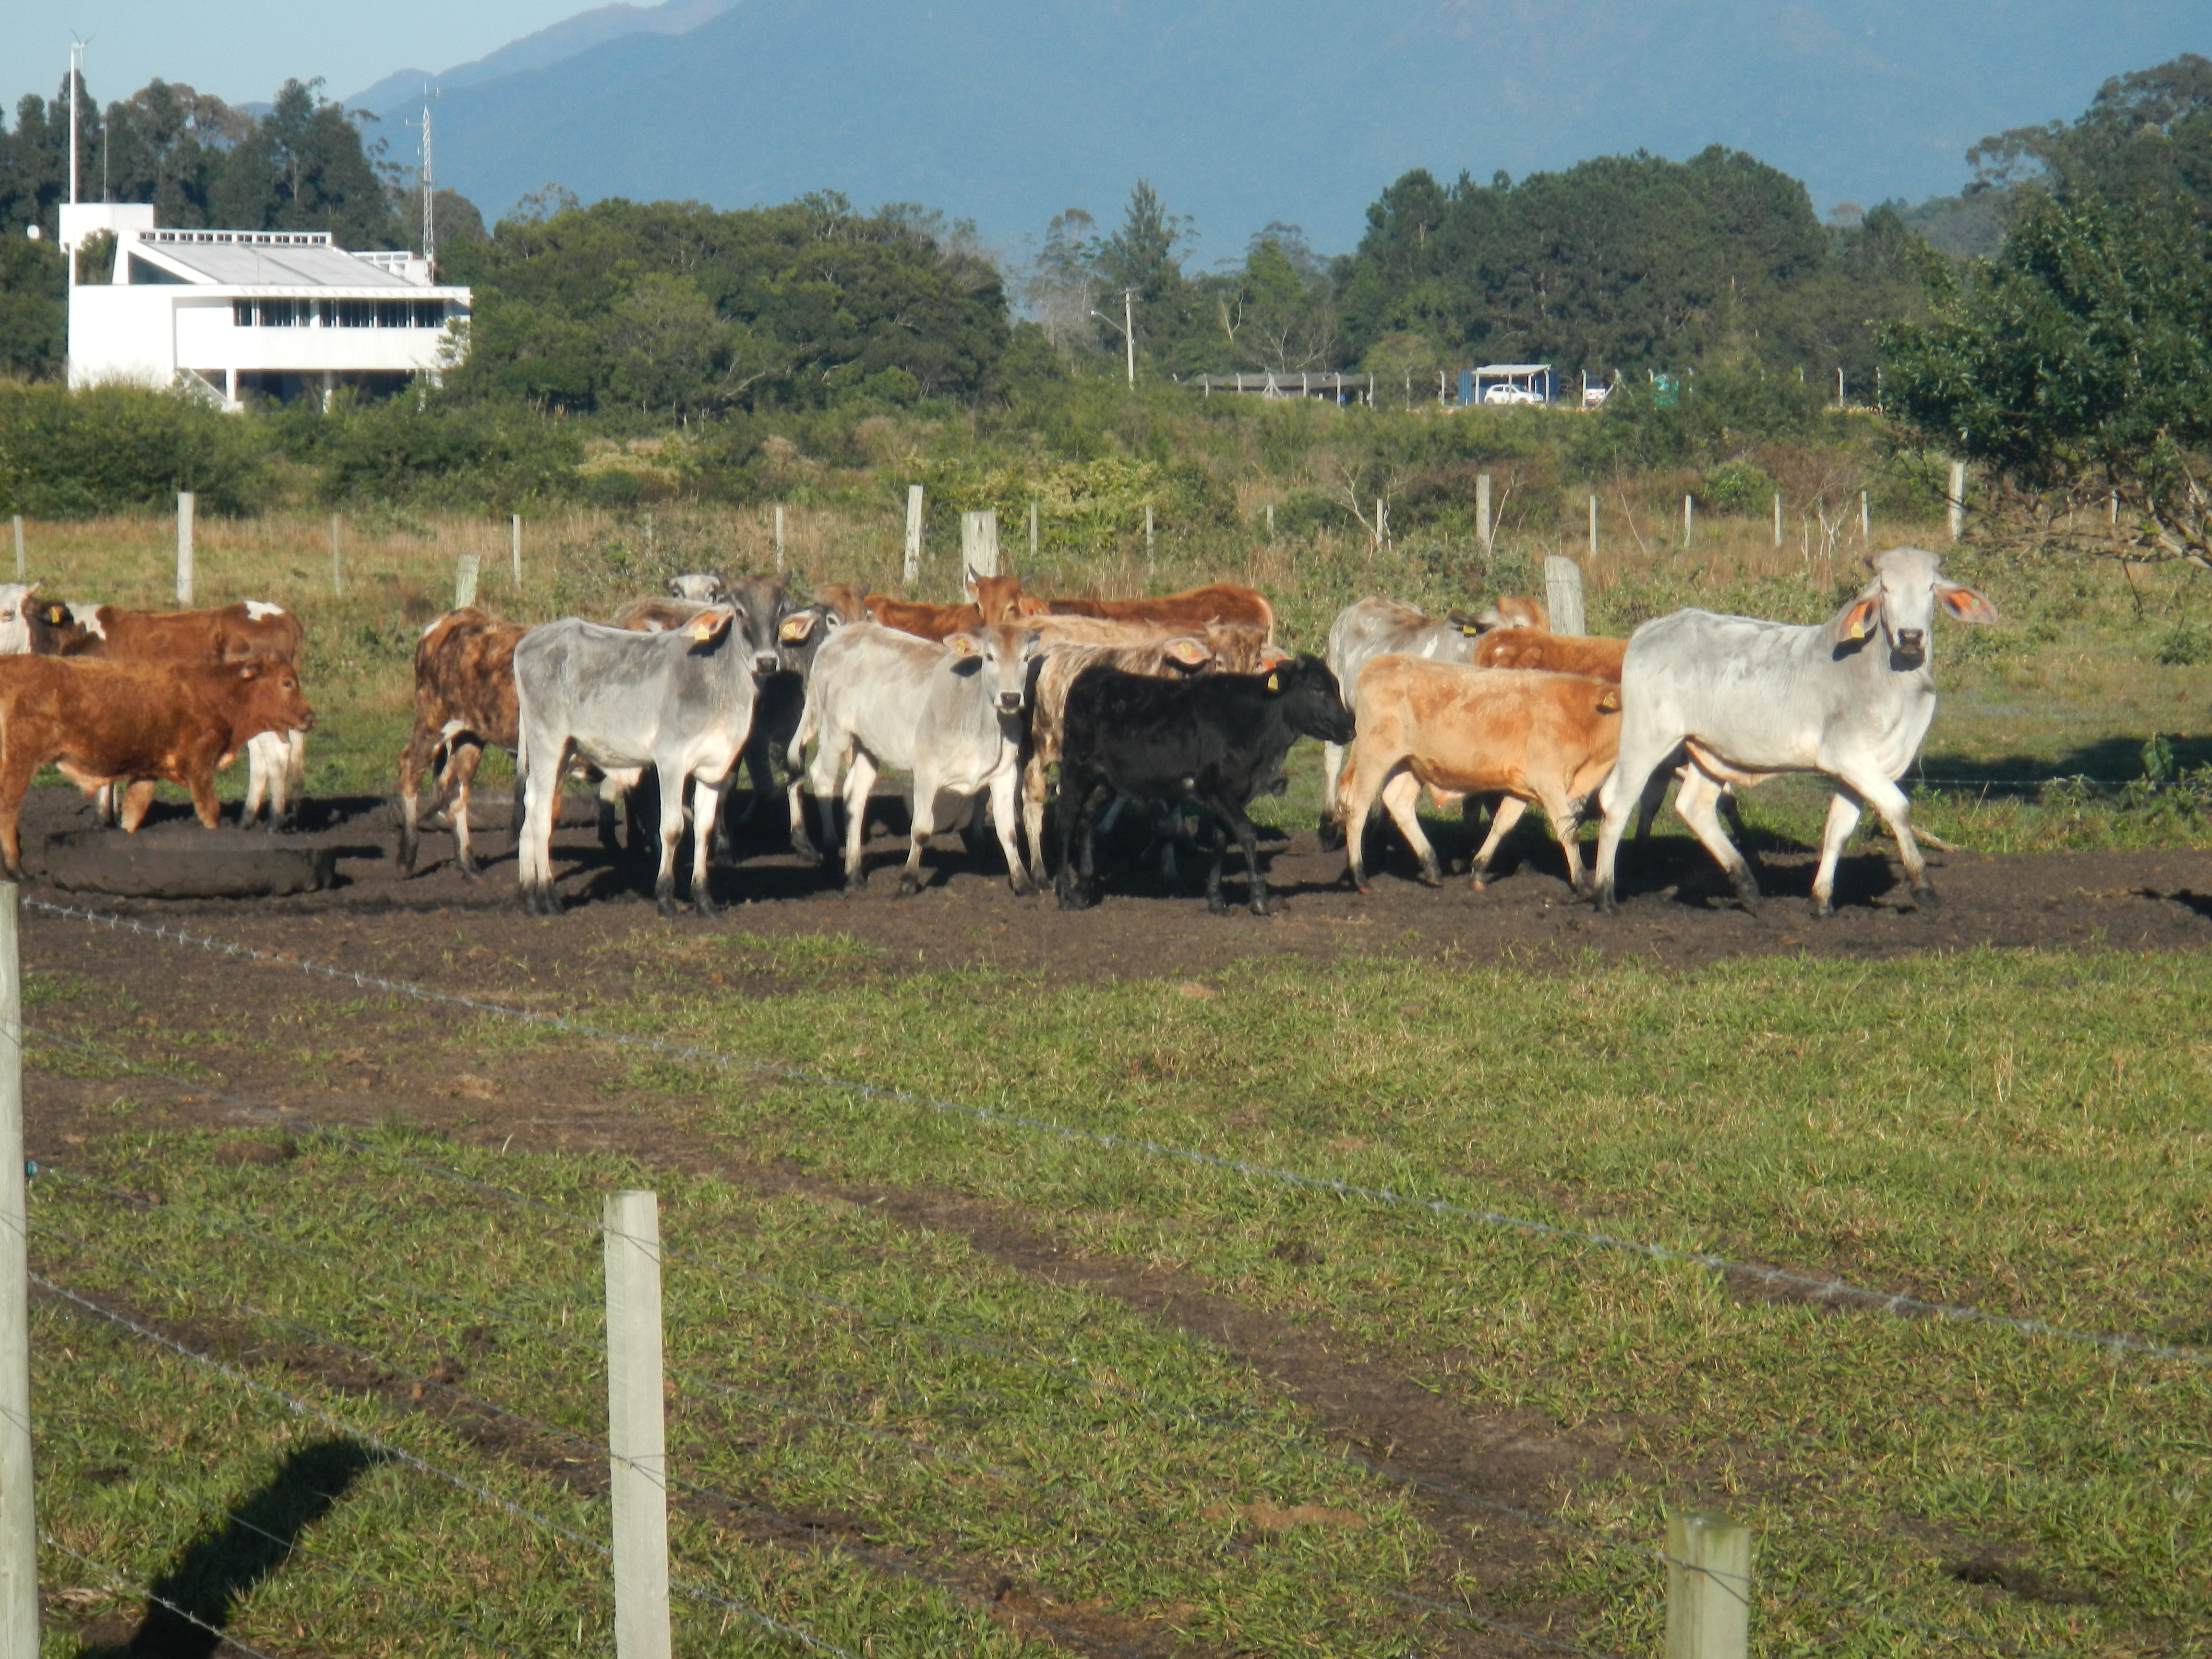 20130729 Fazenda Bovinocultura bovinos lote 2 novo.jpg